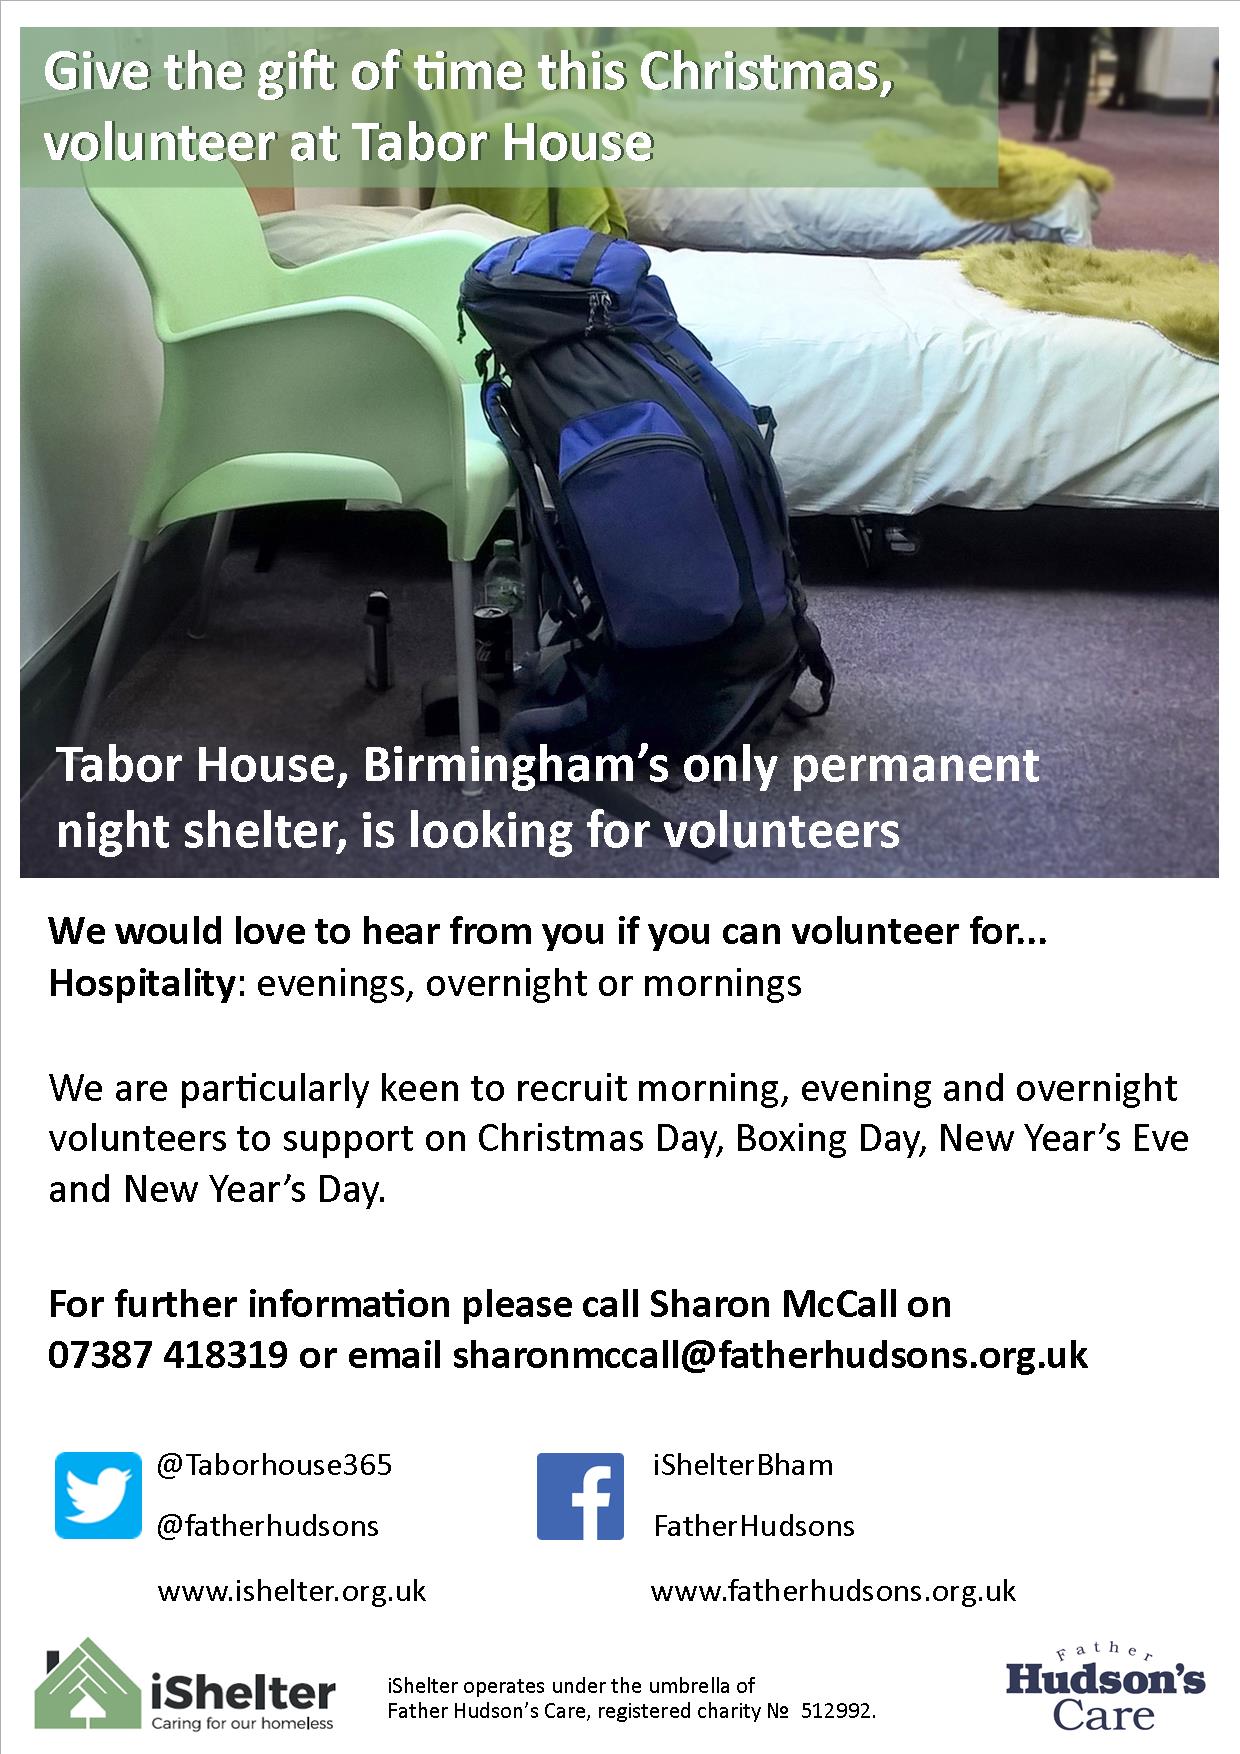 Tabor House is seeking volunteers over Christmas